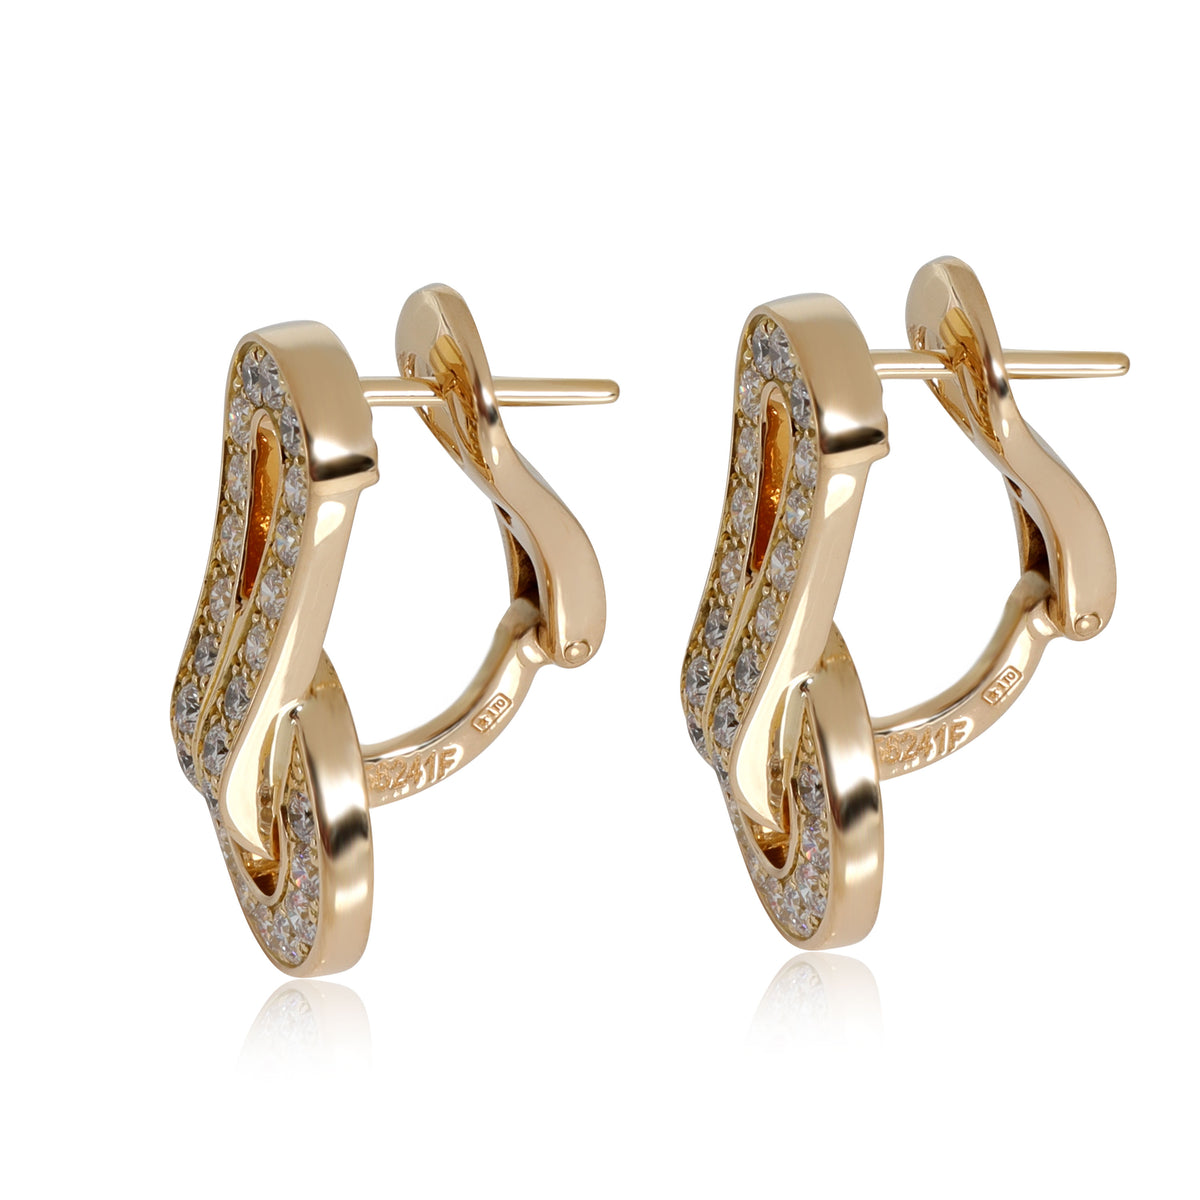 Cartier Agrafe Diamond Earrings in 18K Yellow Gold 1.24 CTW